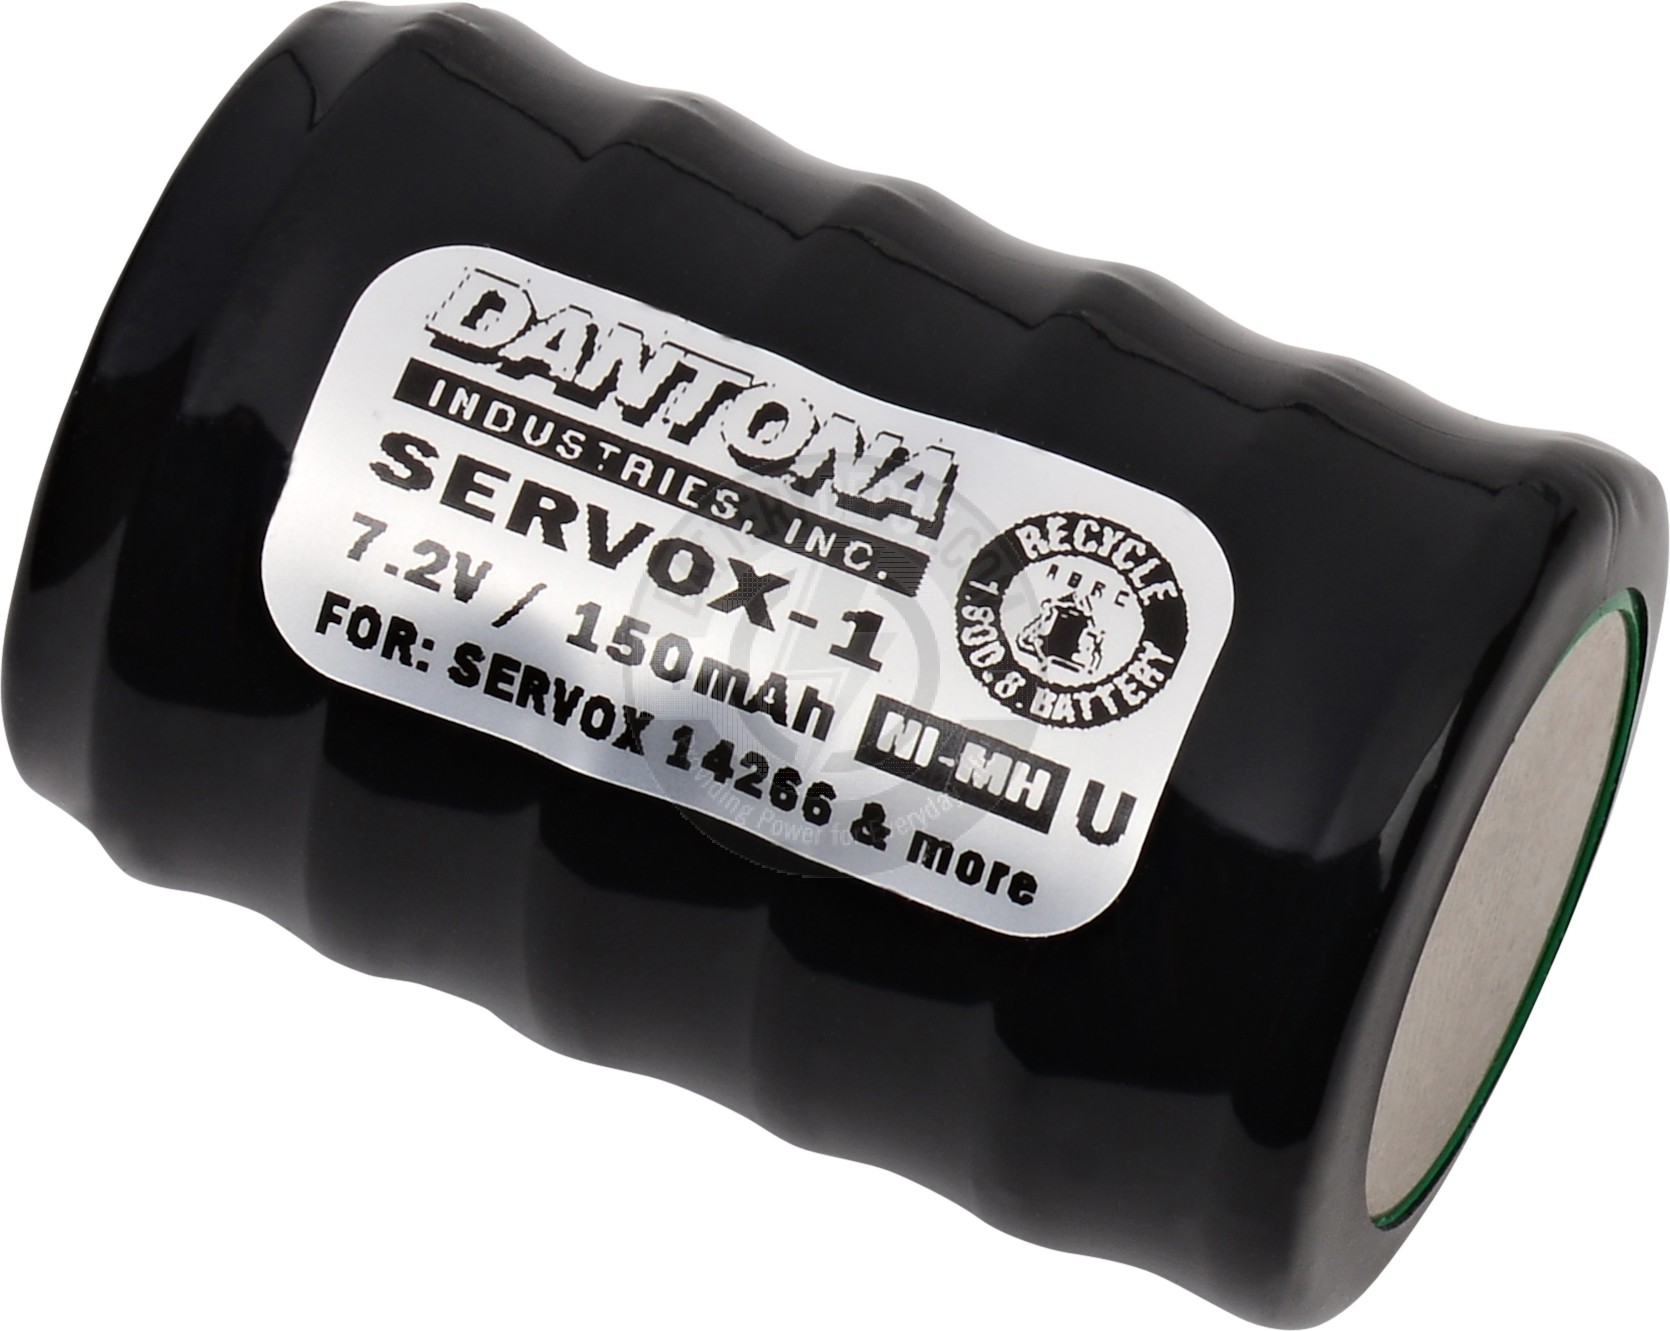 Battery for Servox Digital